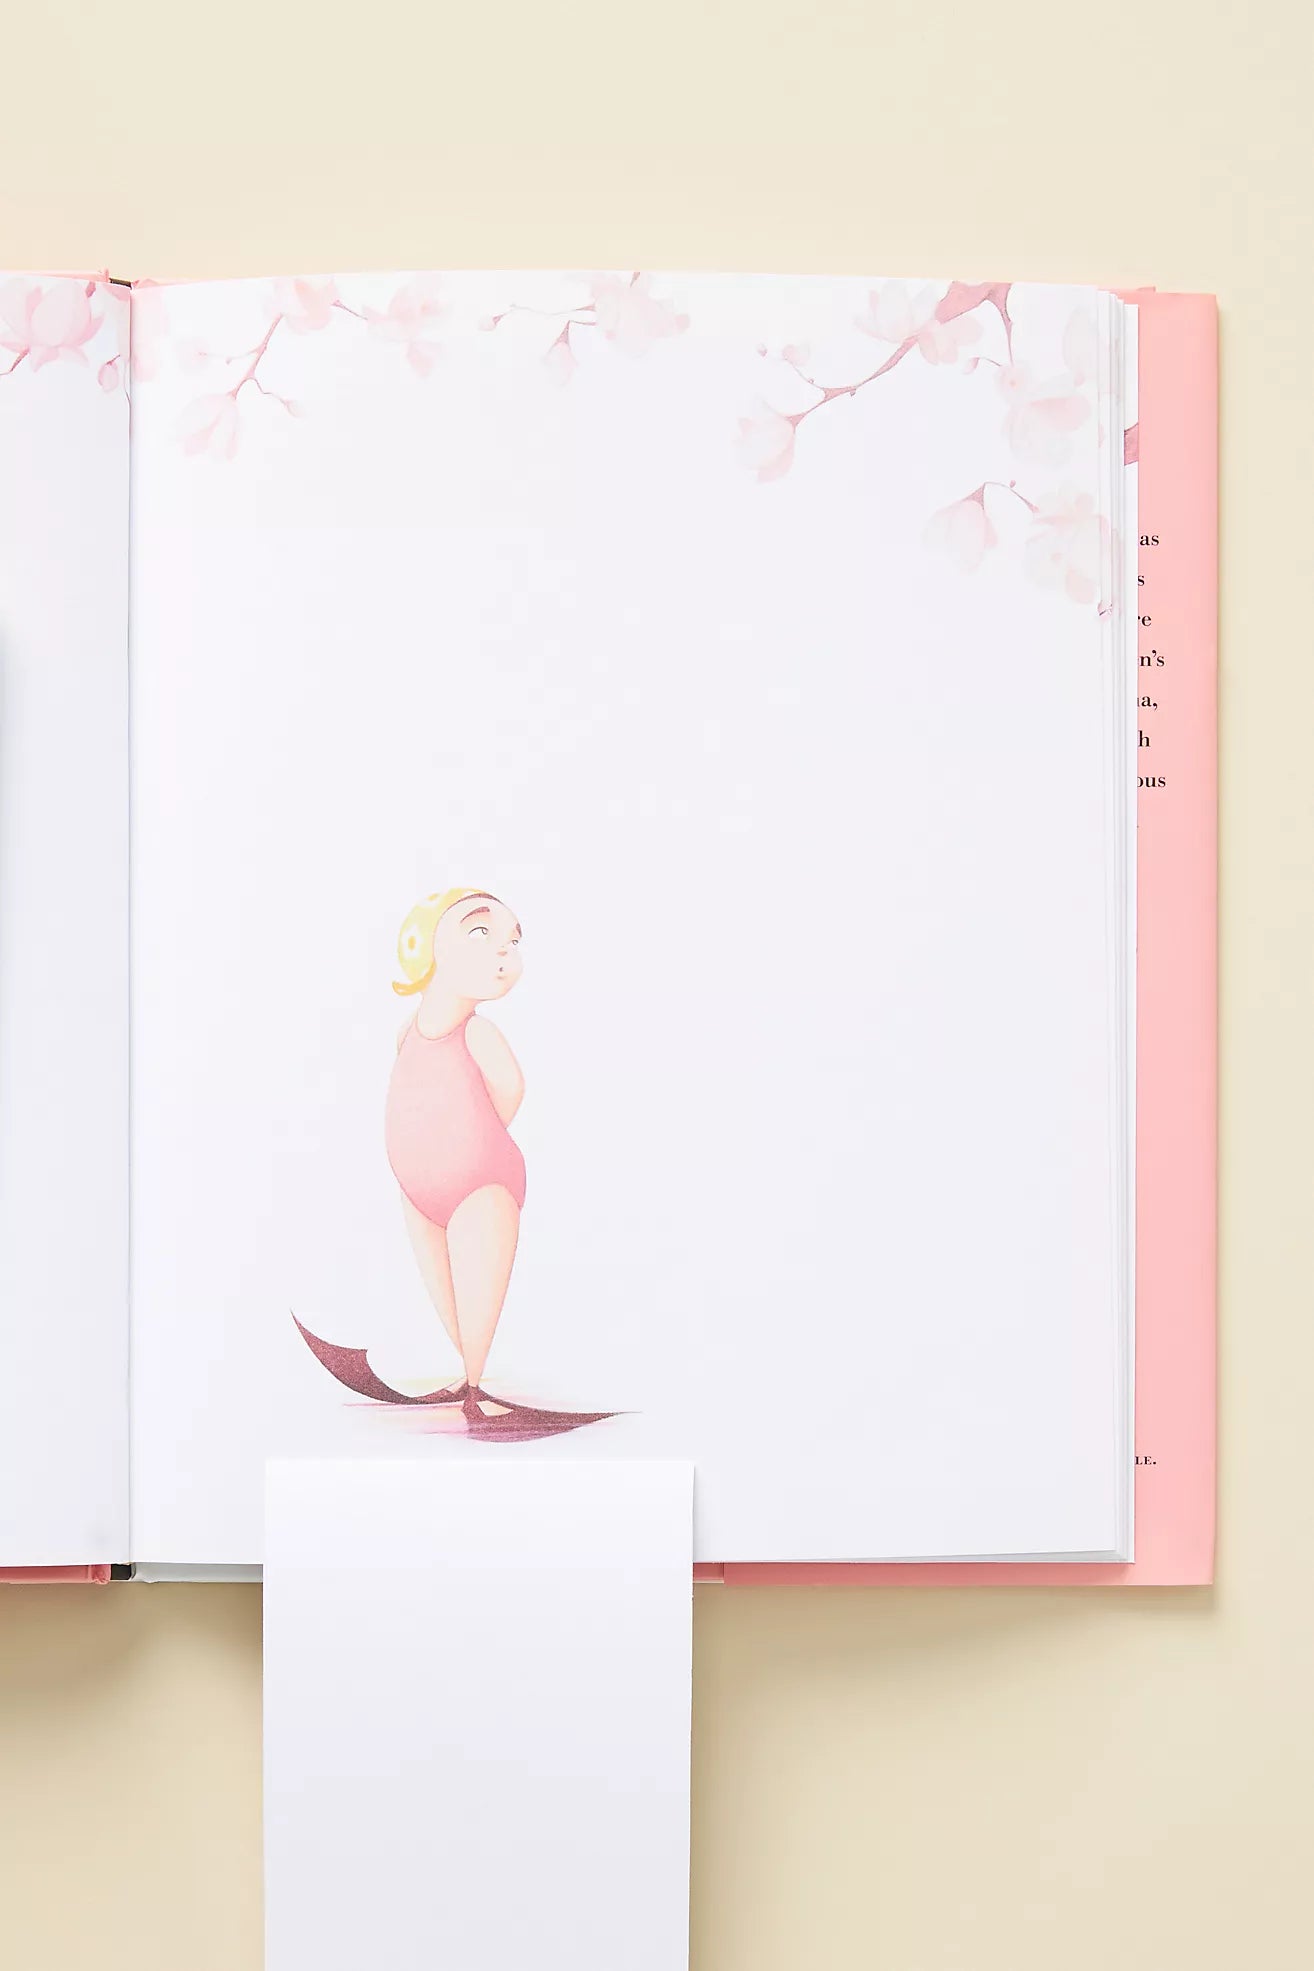 Flora and the Flamingo Book